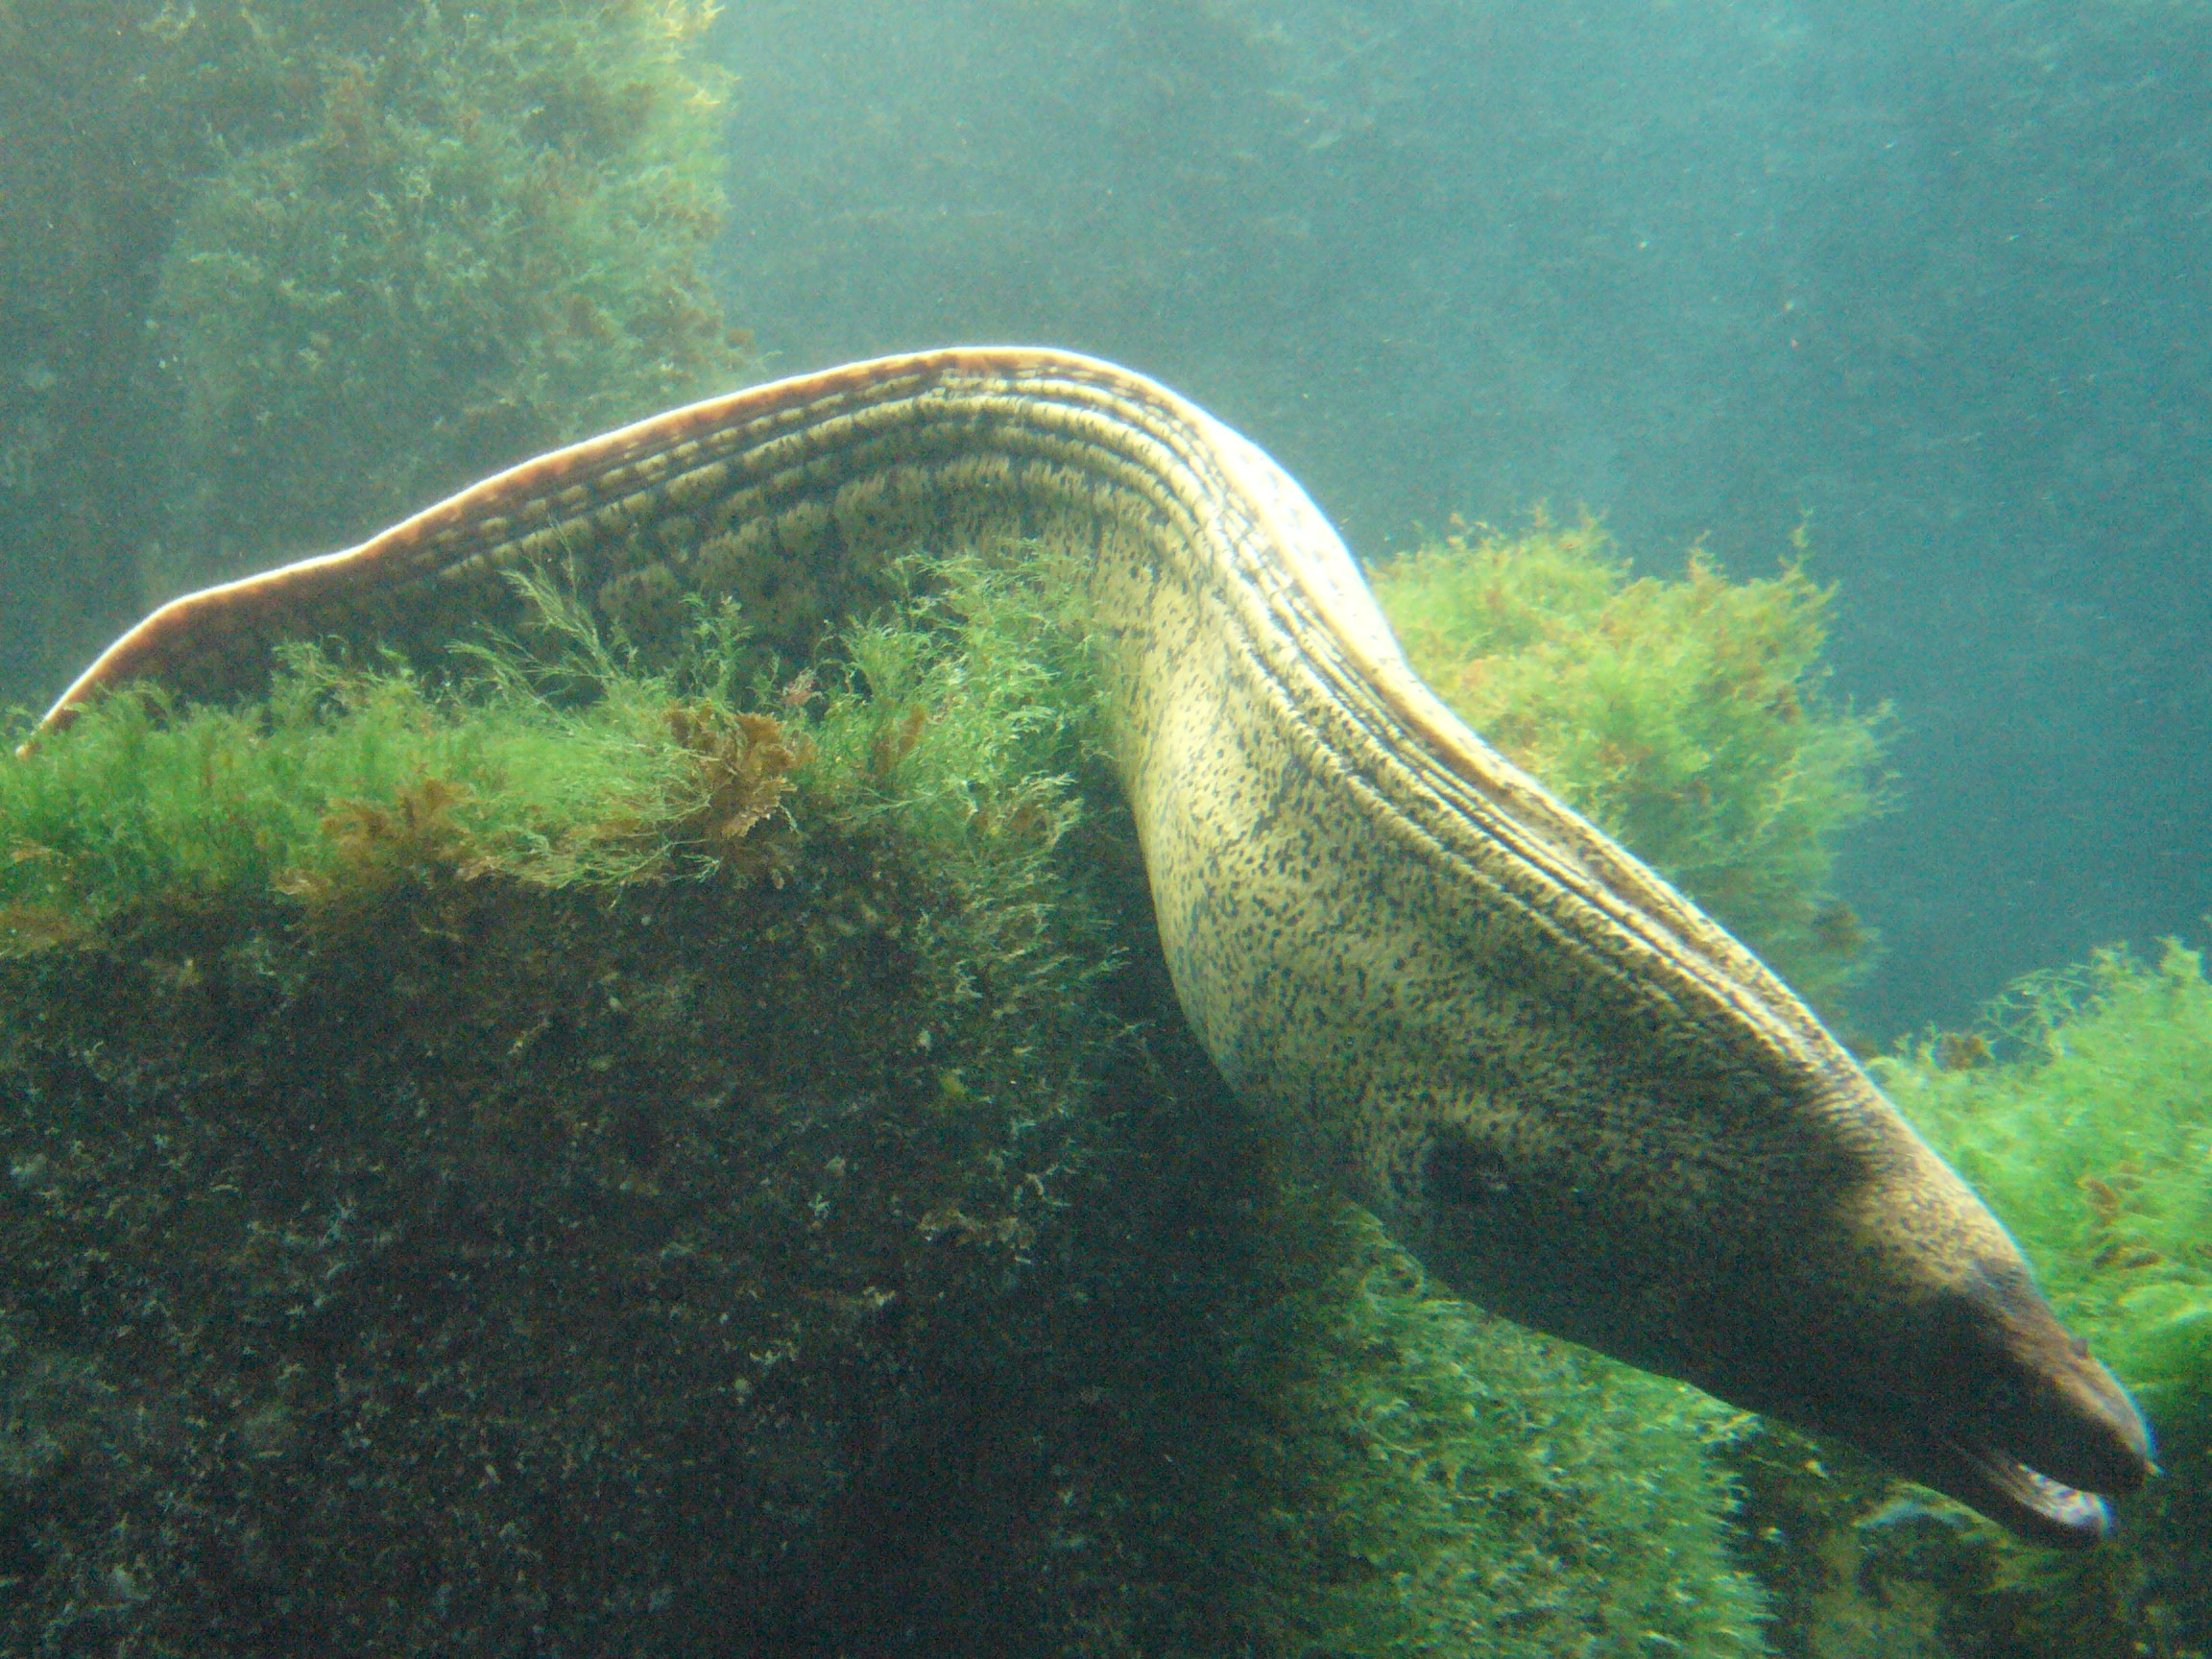 Mediterranean moray – Muraena helena - Fish